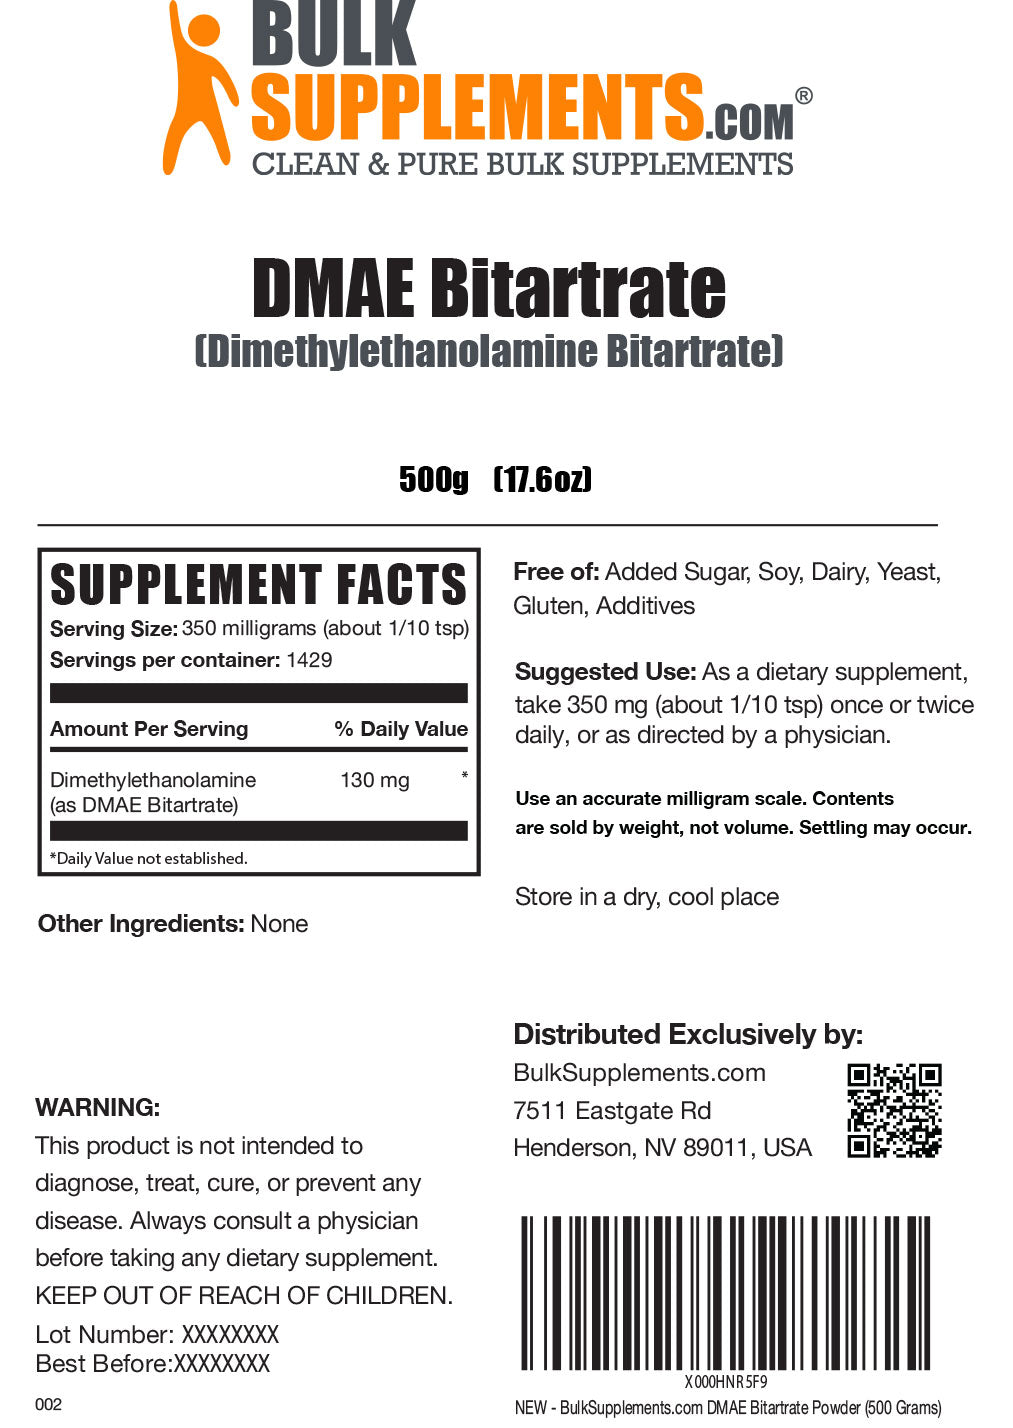 DMAE-Bitartrate powder label 500g